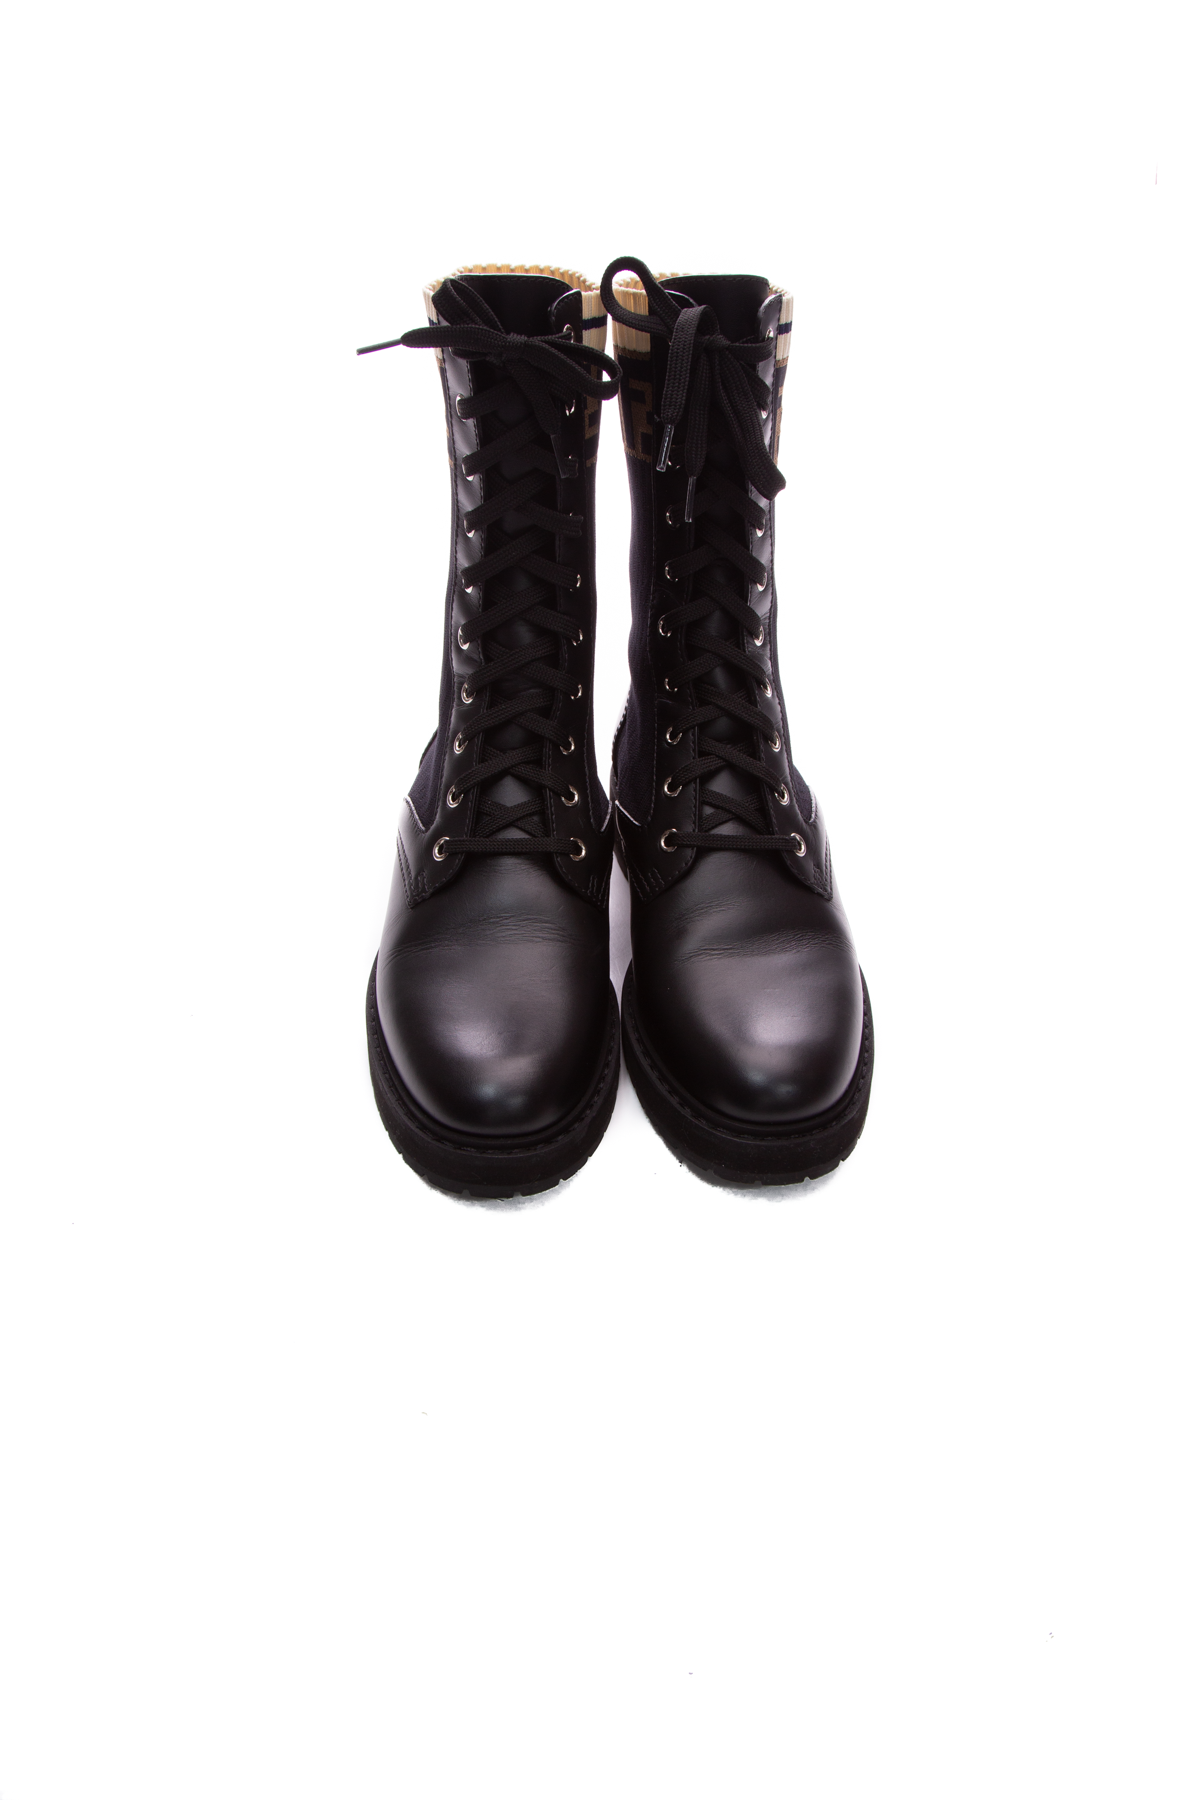 Fendi Black Rockoko Combat Boots - Size 39